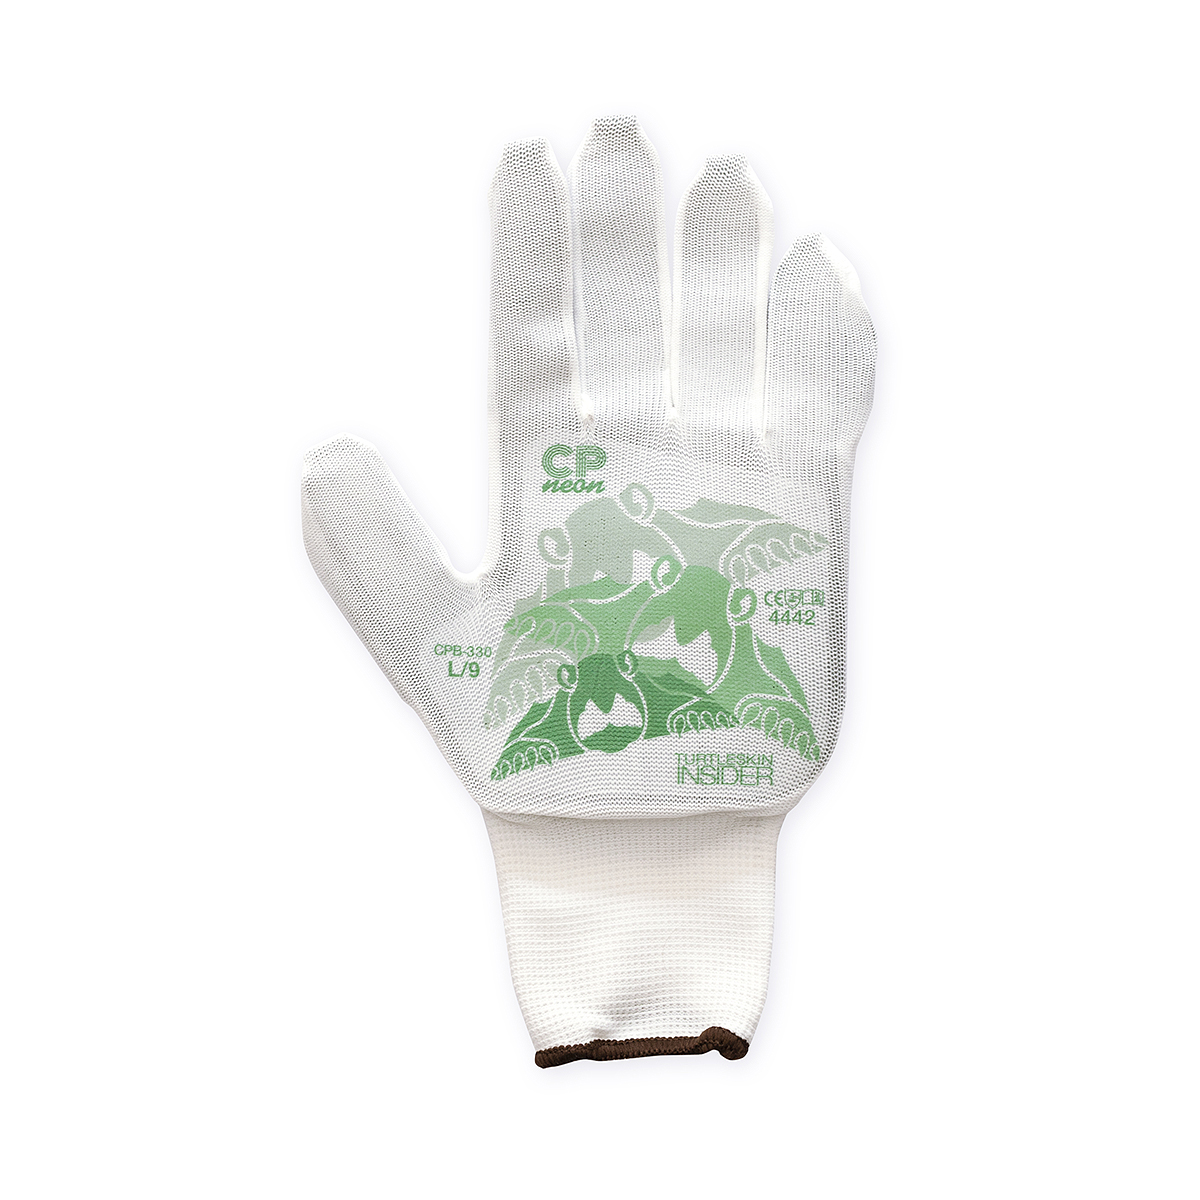 Turtleskin Gloves - Size Large